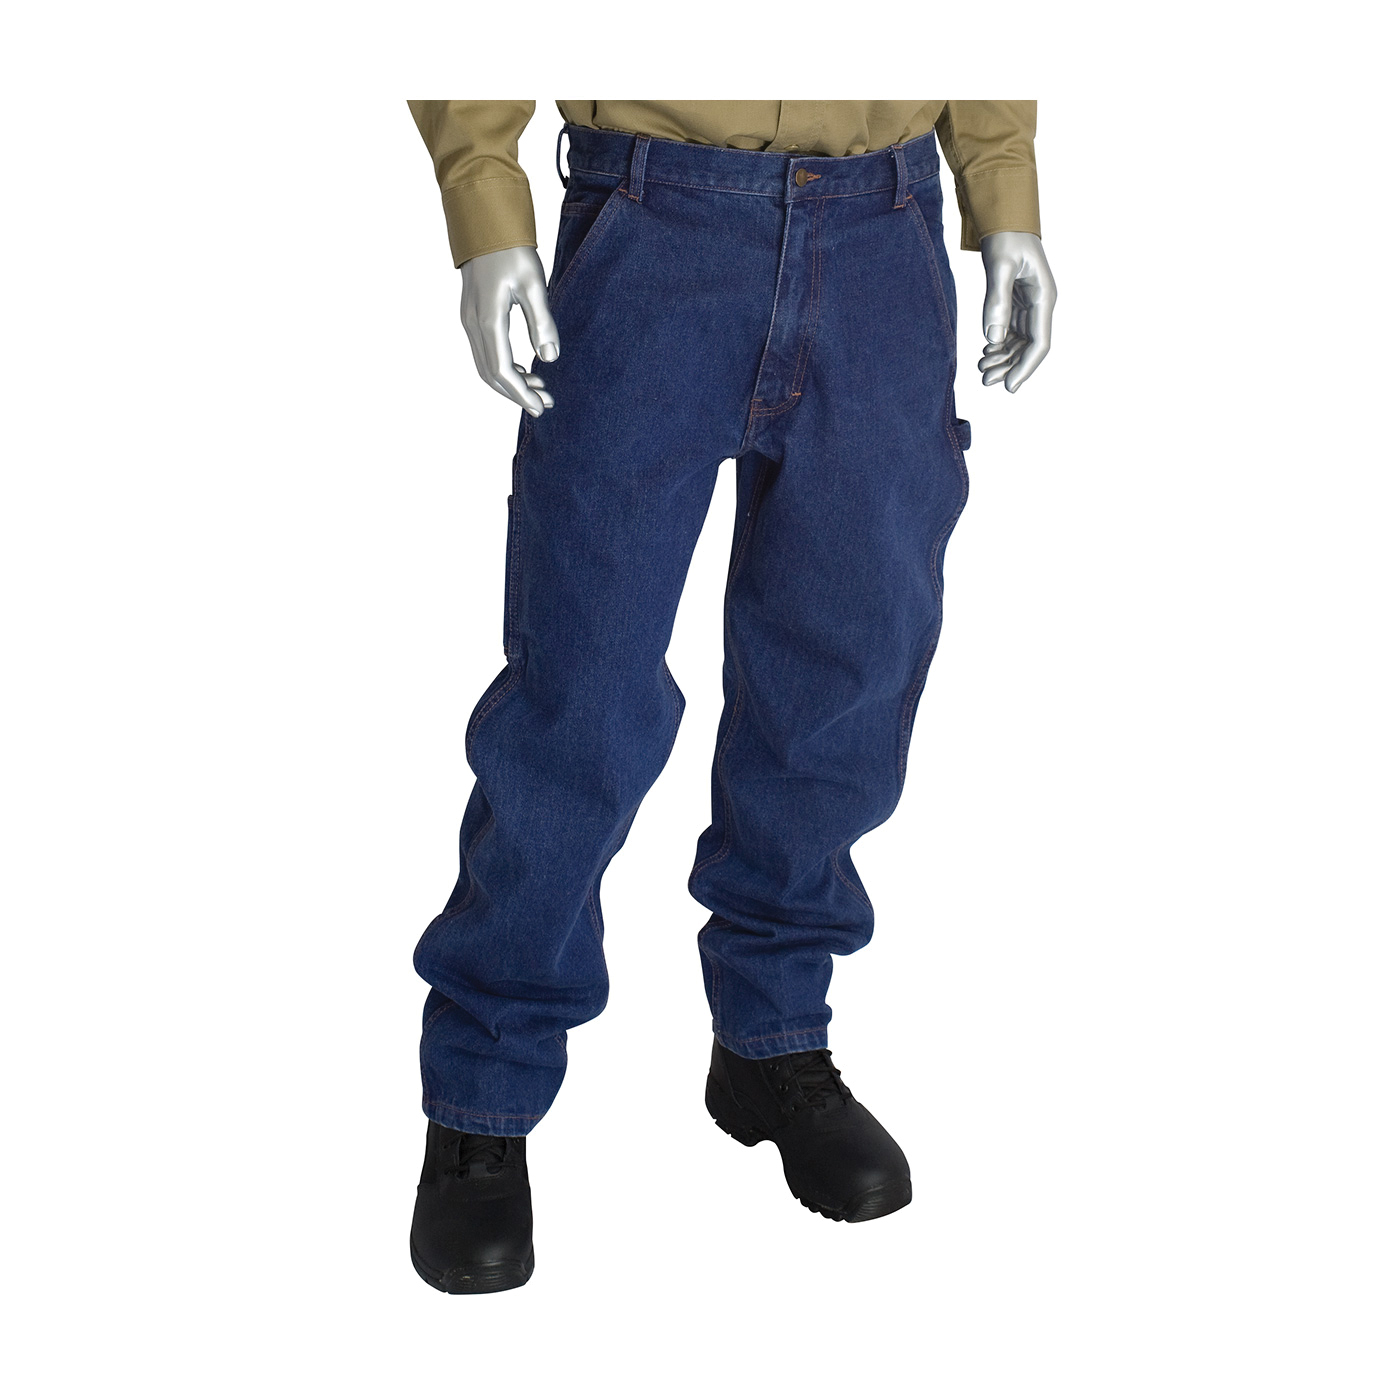 PIP® 385-FRCJ-4434 Carpenter Jeans, 44 in Waist, 34 in L Inseam, Blue Denim, Cotton